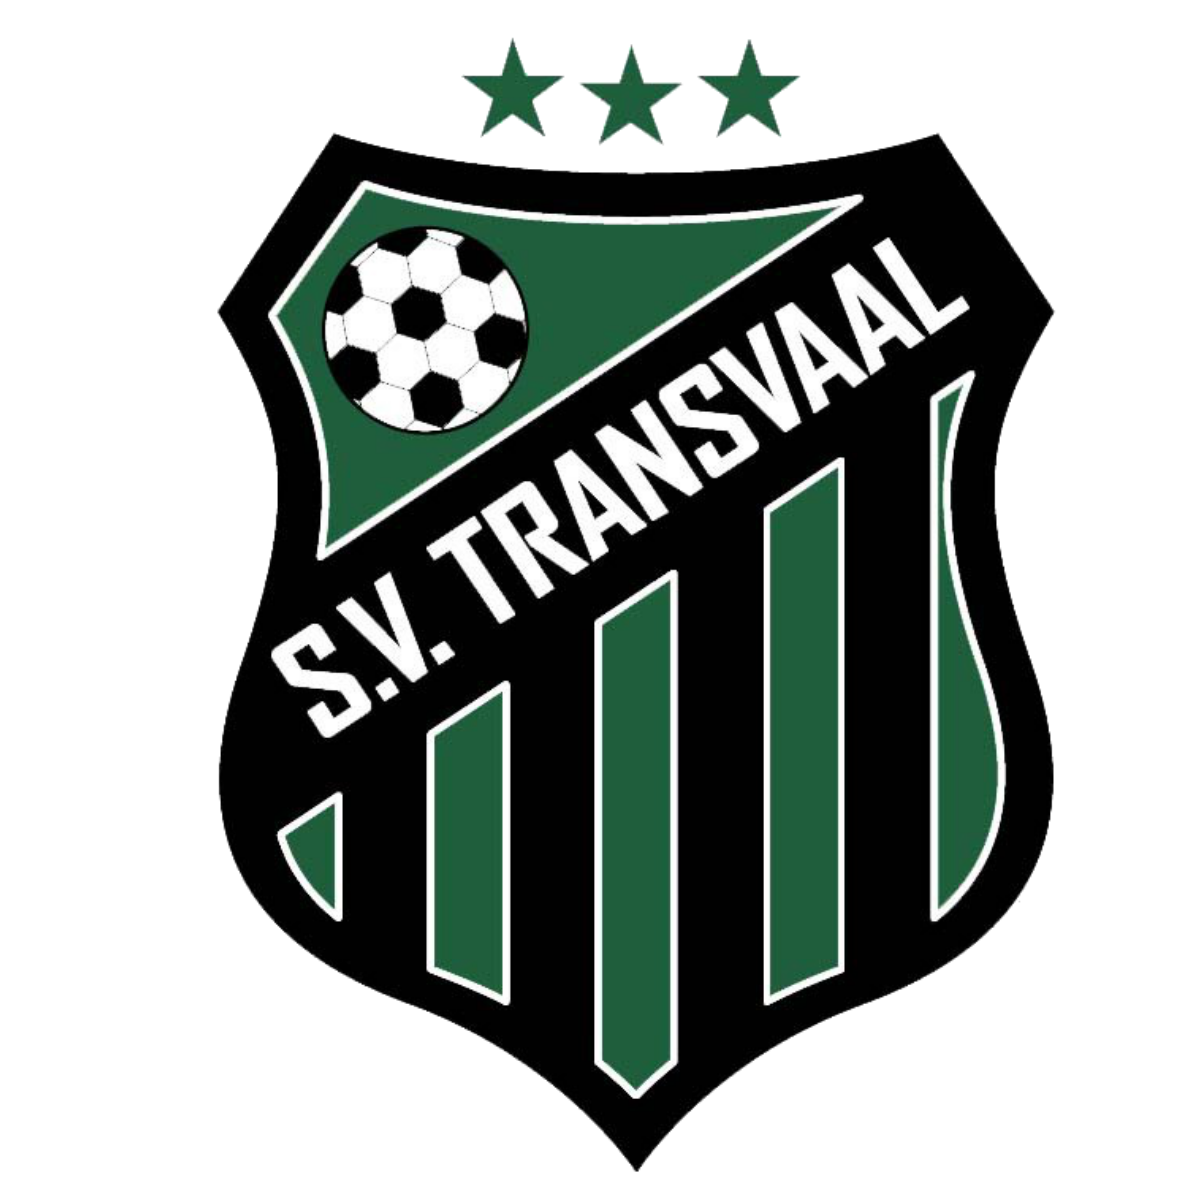 FC Las Tunas - Wikipedia